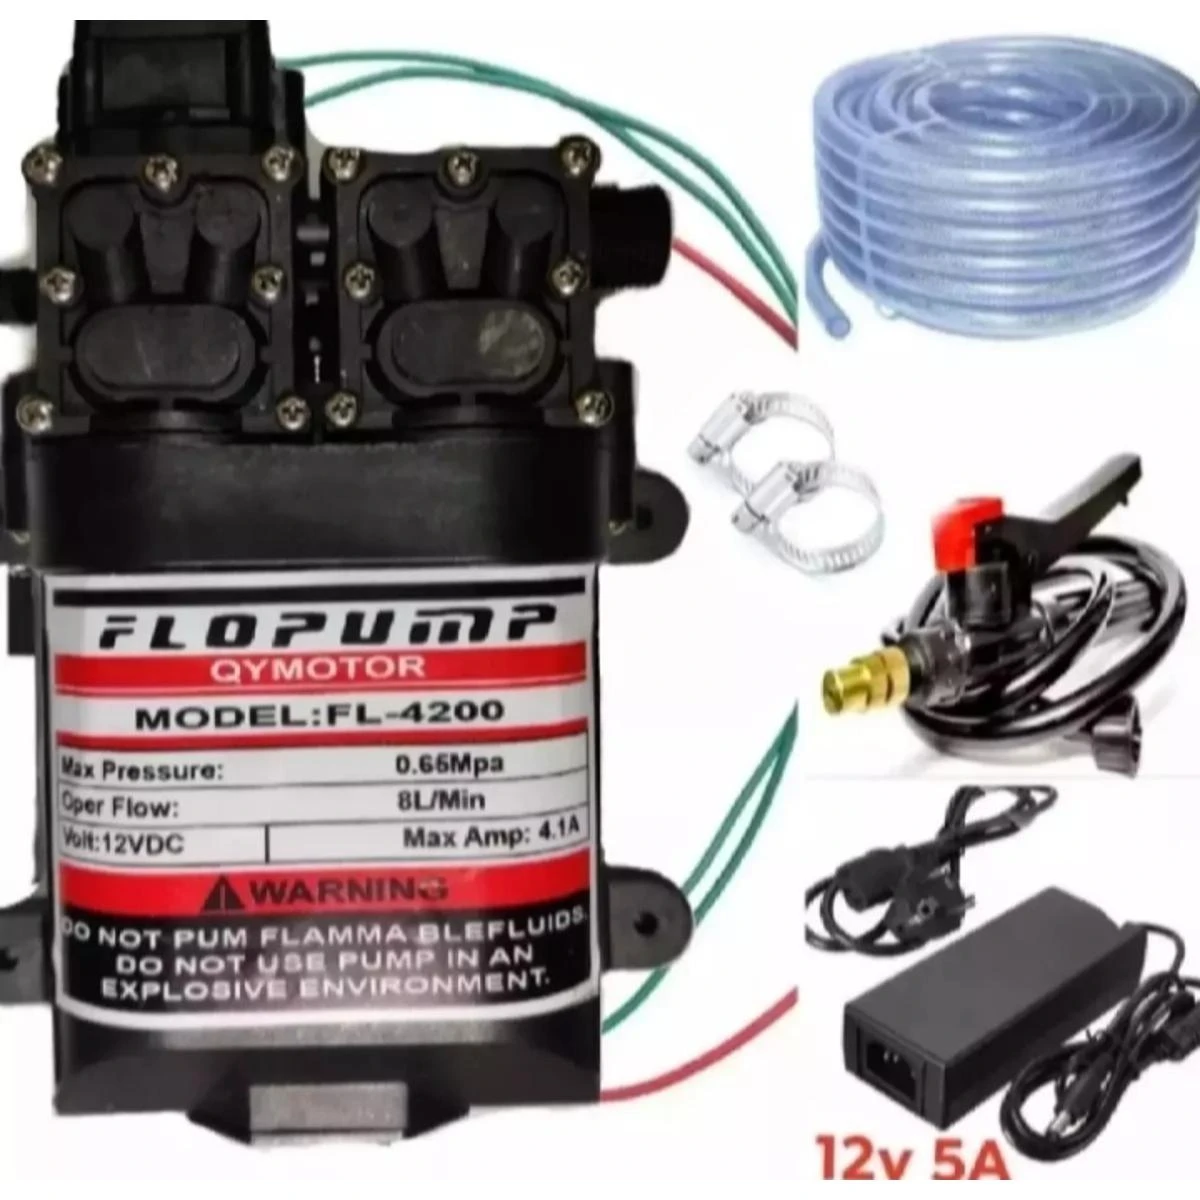 Dubble Pump Bike & Car Washing Water Pump Motor full set AC & DC double pump double pump for Bike & Car Wash